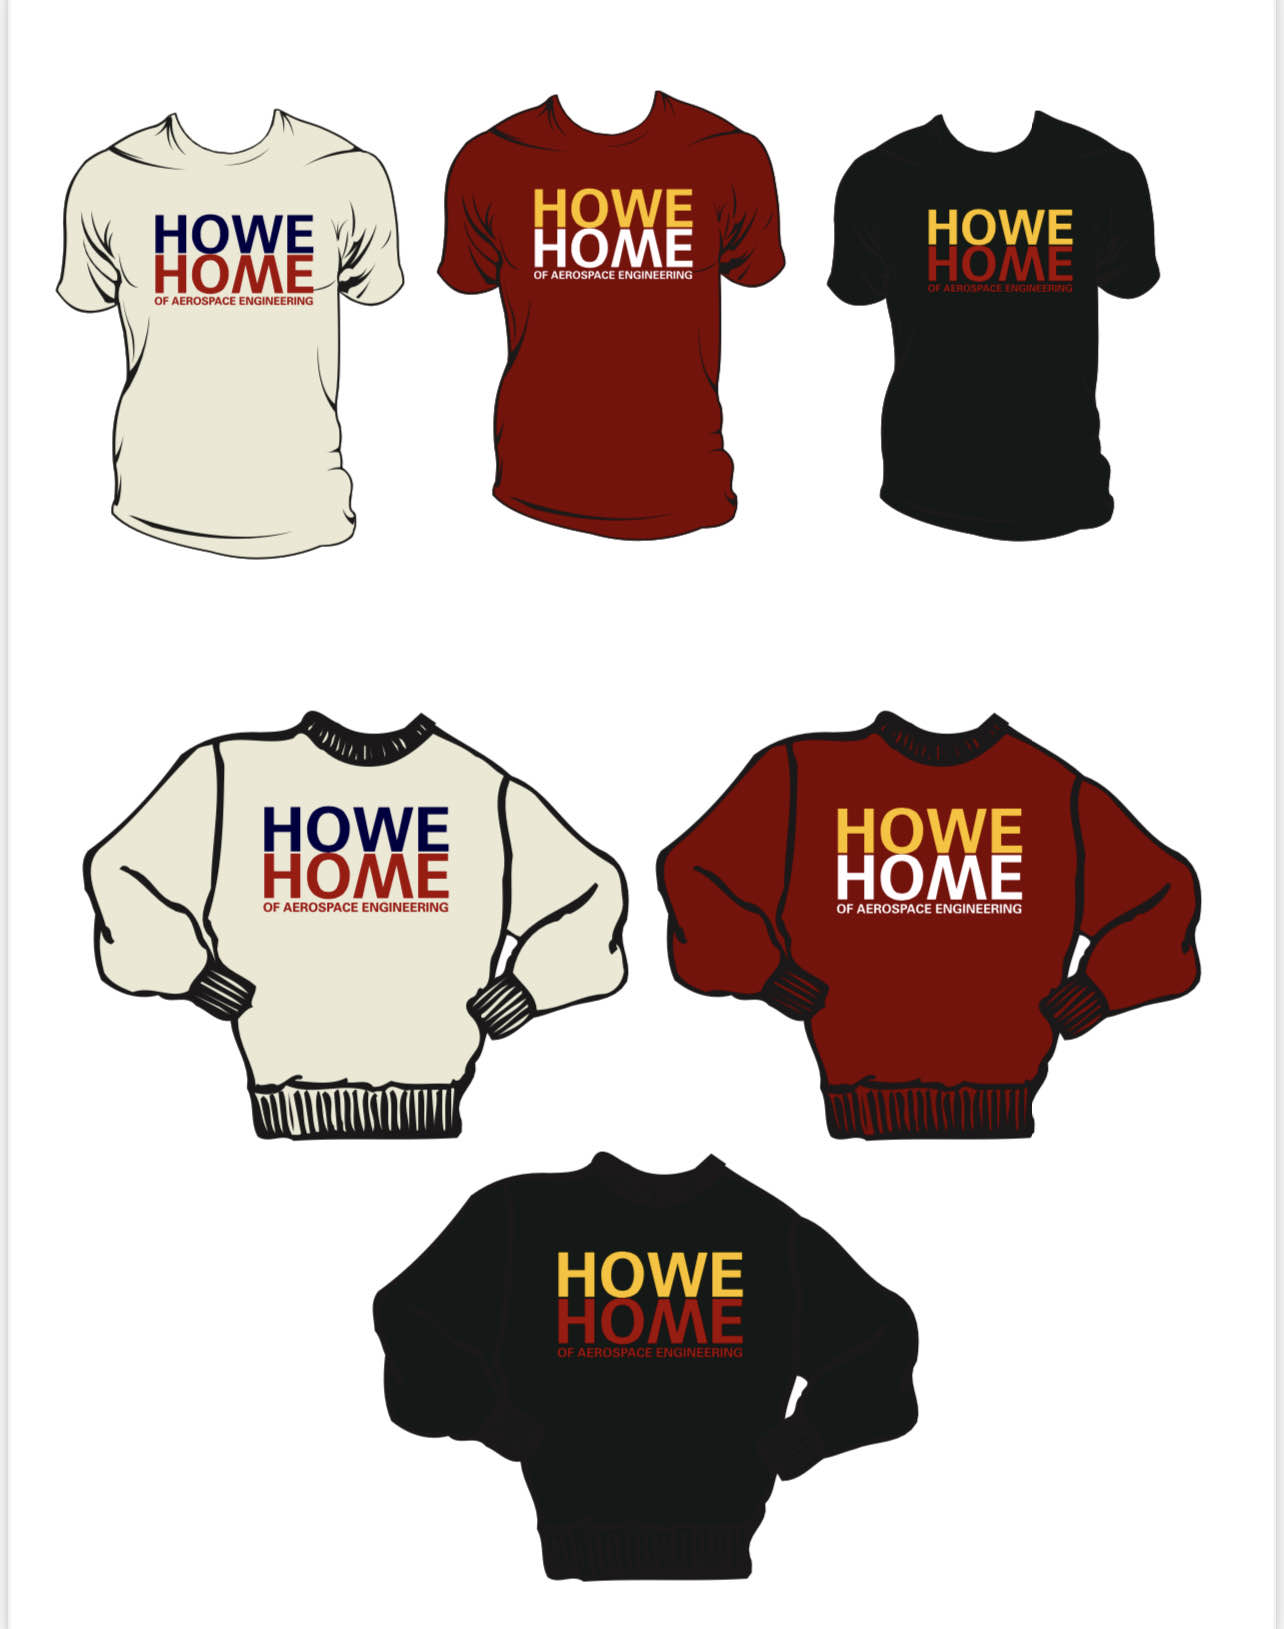 Howe Home Merch Sales!